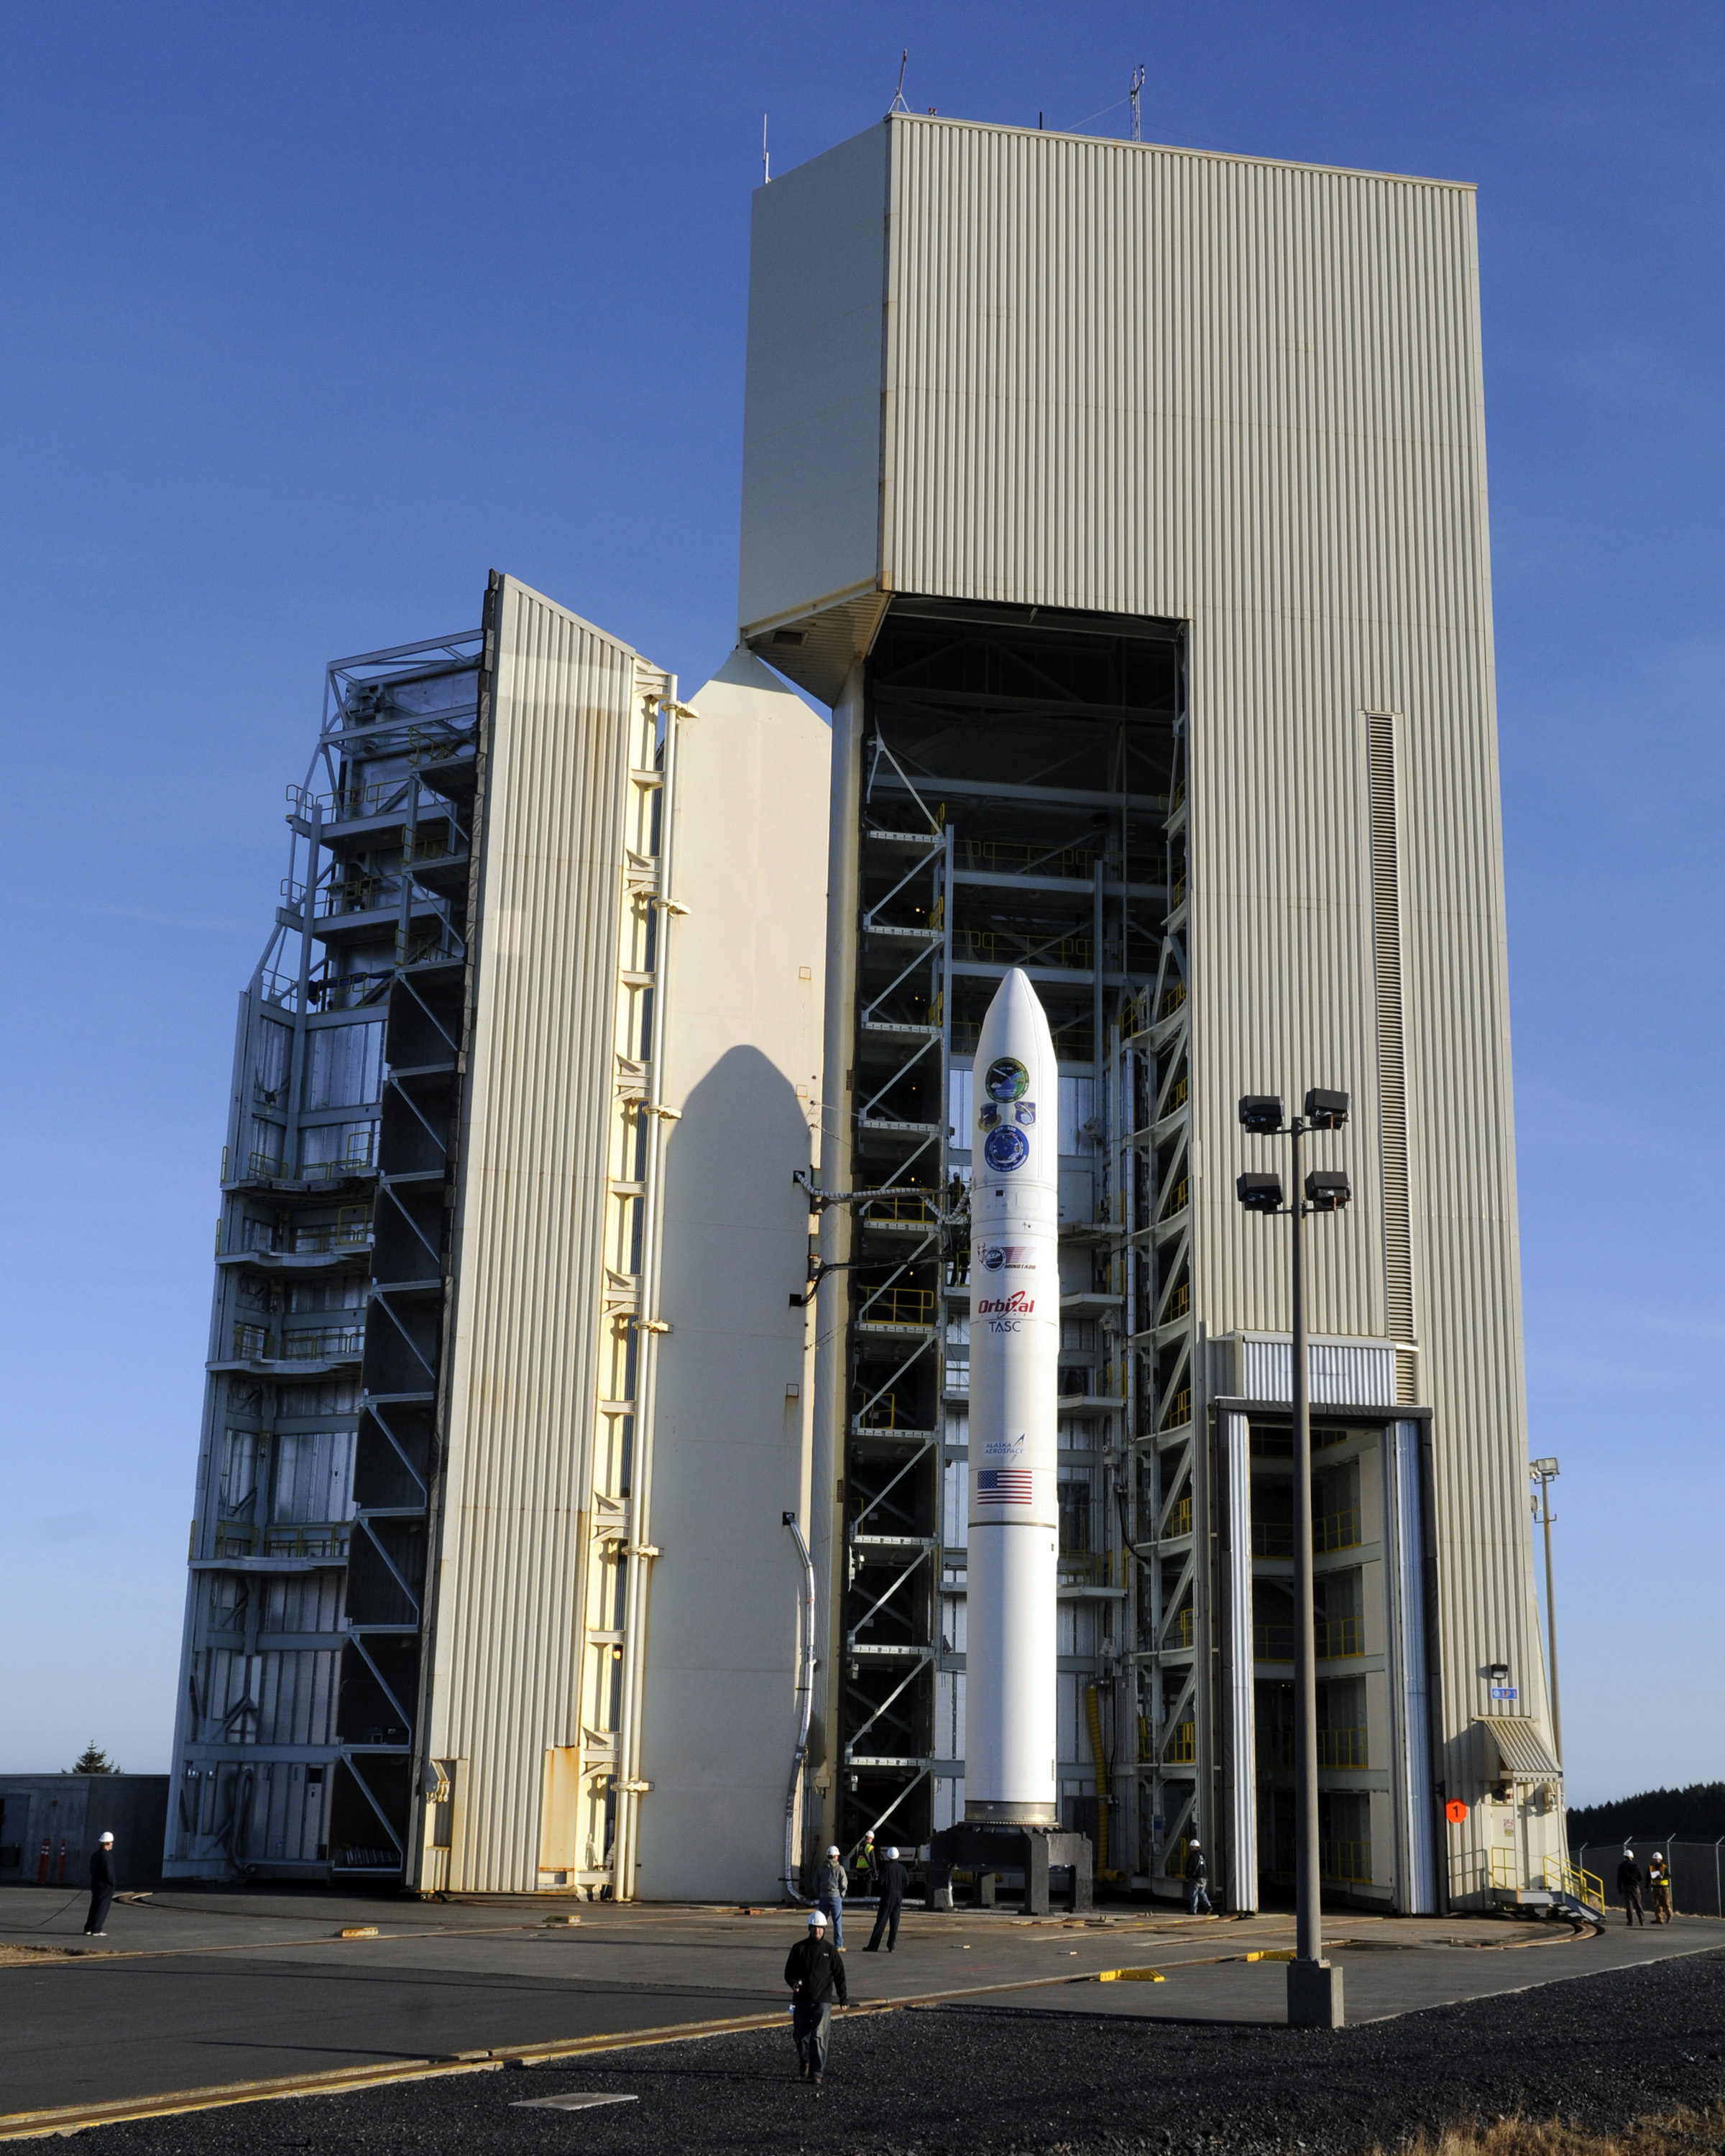 Kodiak Launch Complex 3